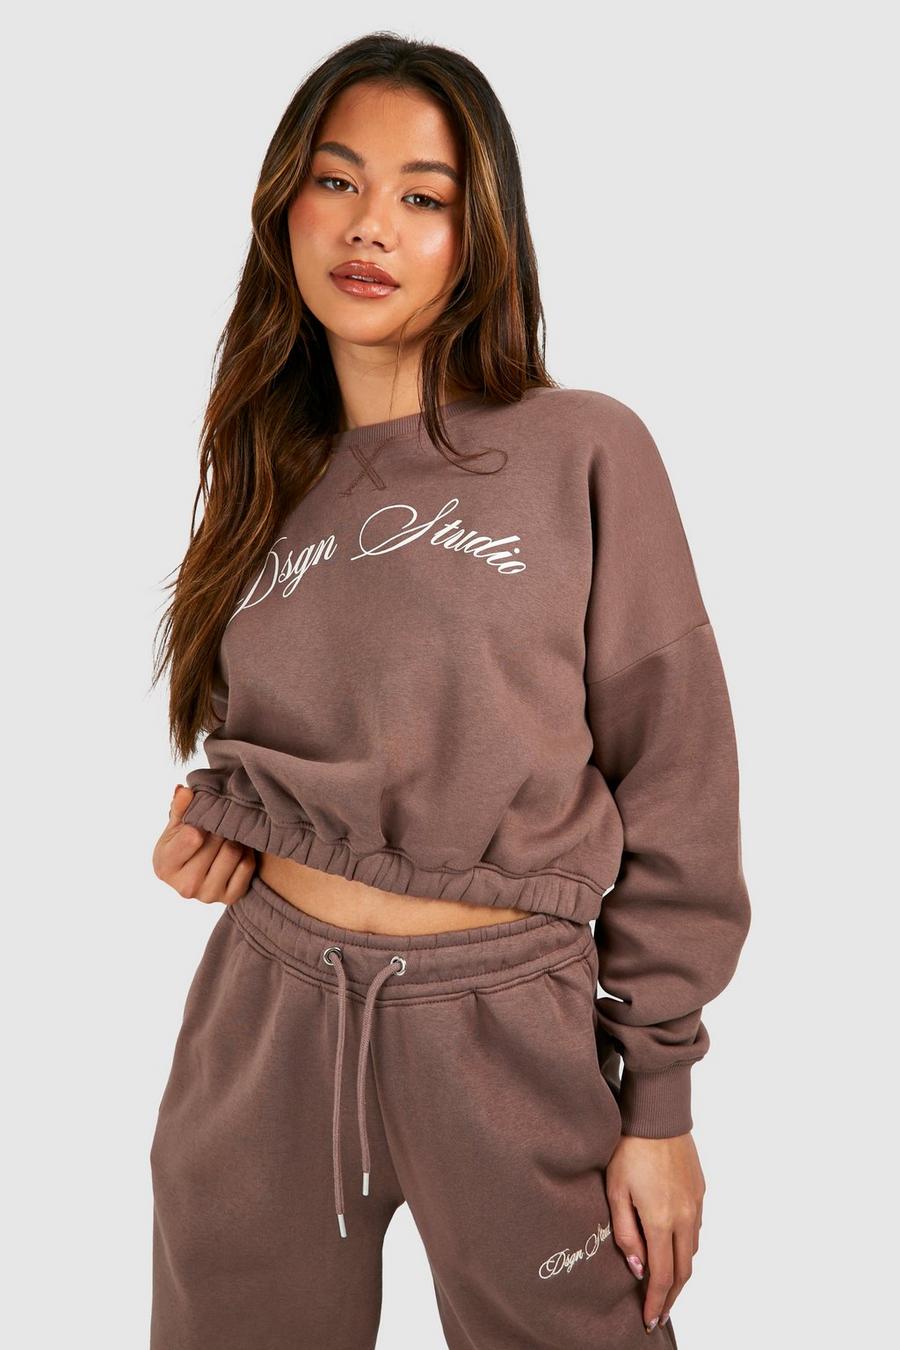 Womens Hoodies and Sweatshirts Sale